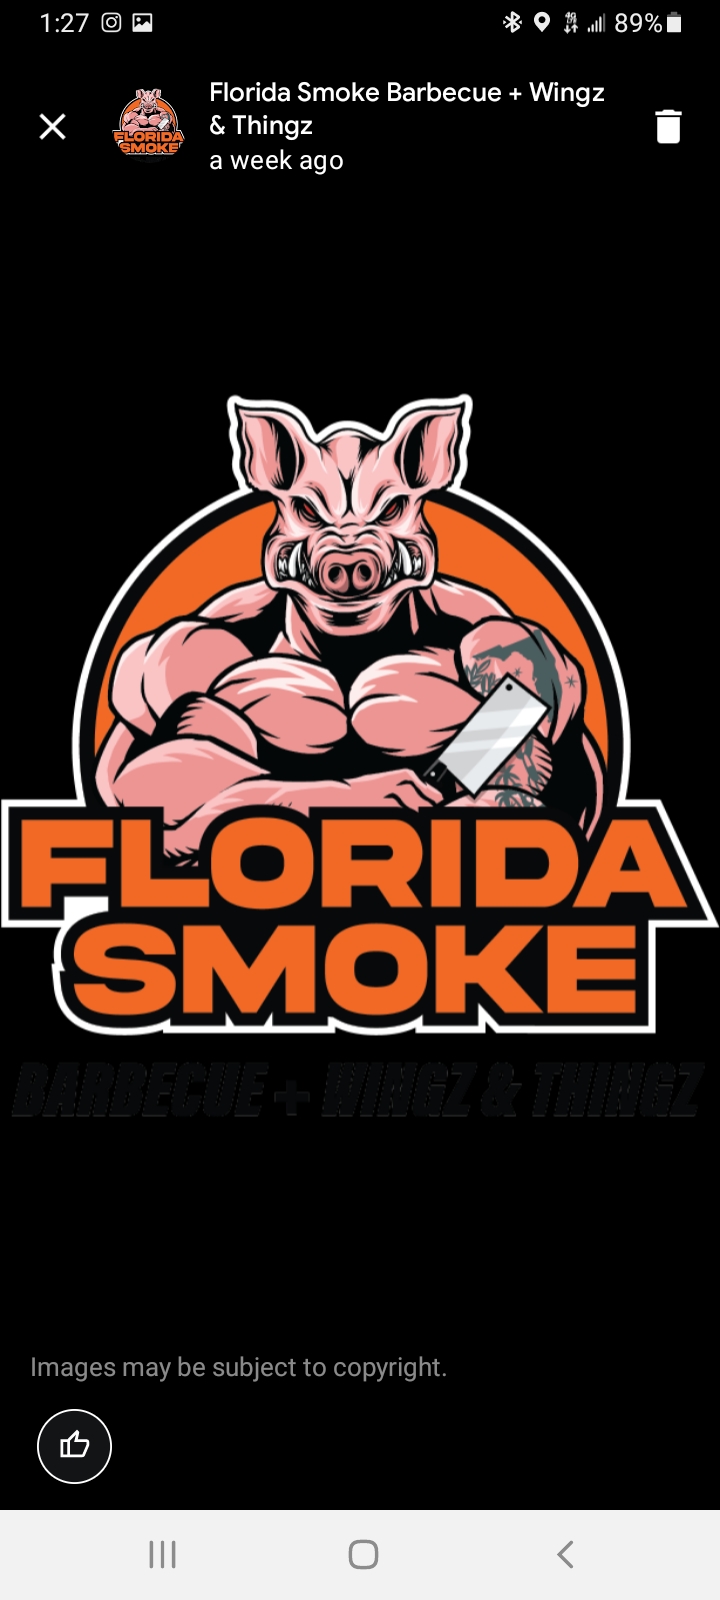 Florida Smoke food truck profile image